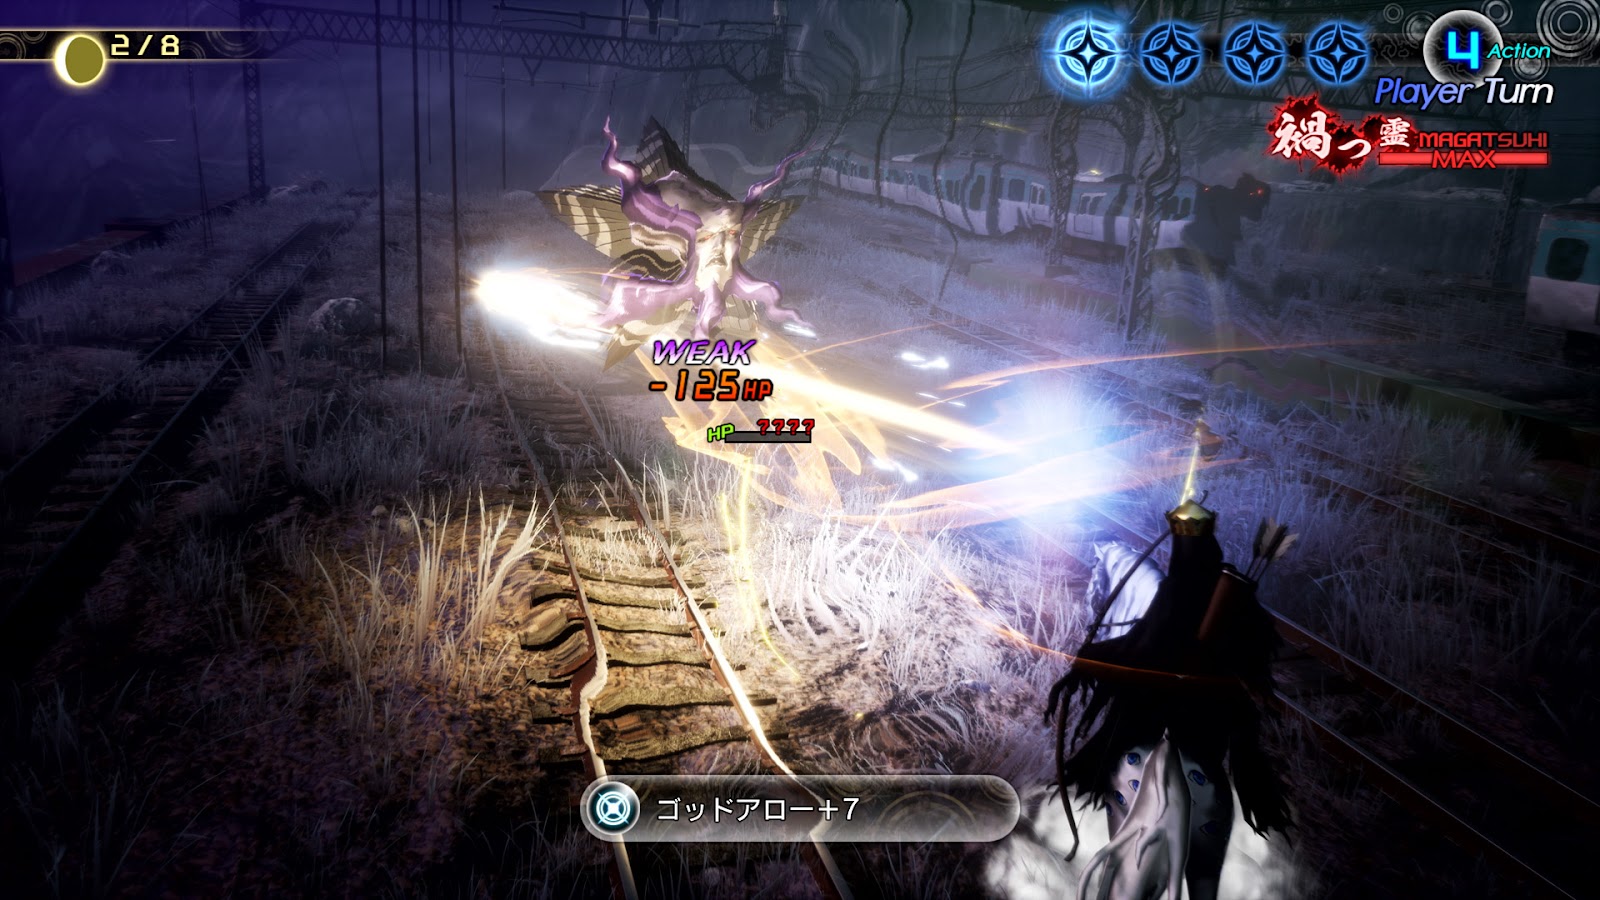 Shin Megami Tensei V: Vengeance Telah Dirilis di Berbagai Platform!